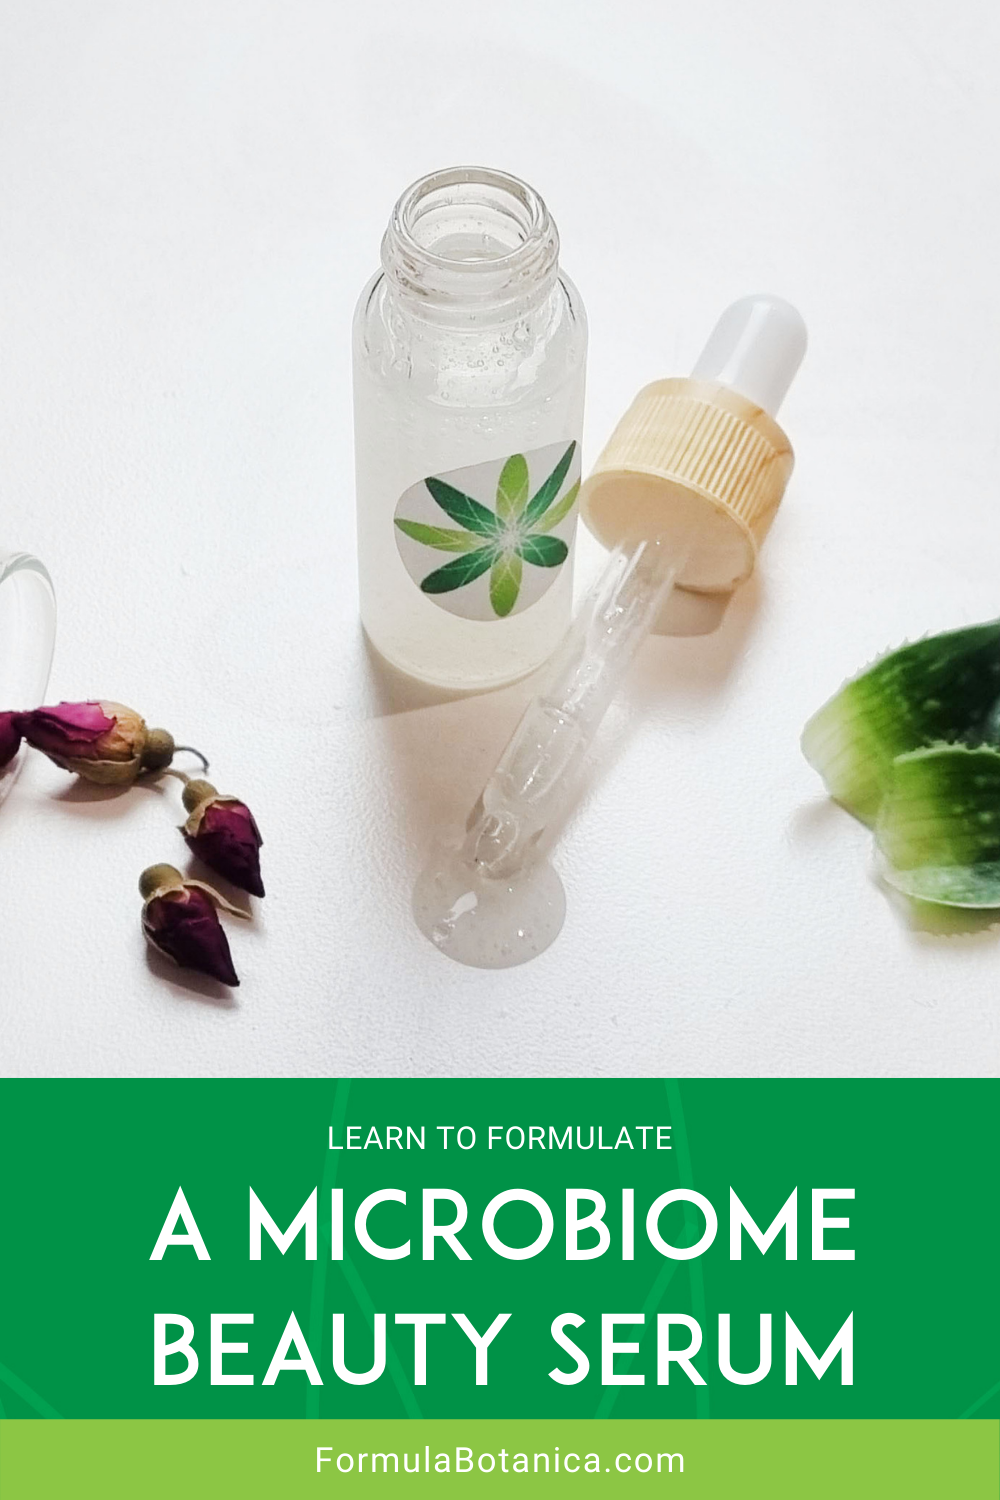 Microbiome skincare: formulate a probiotic beauty serum